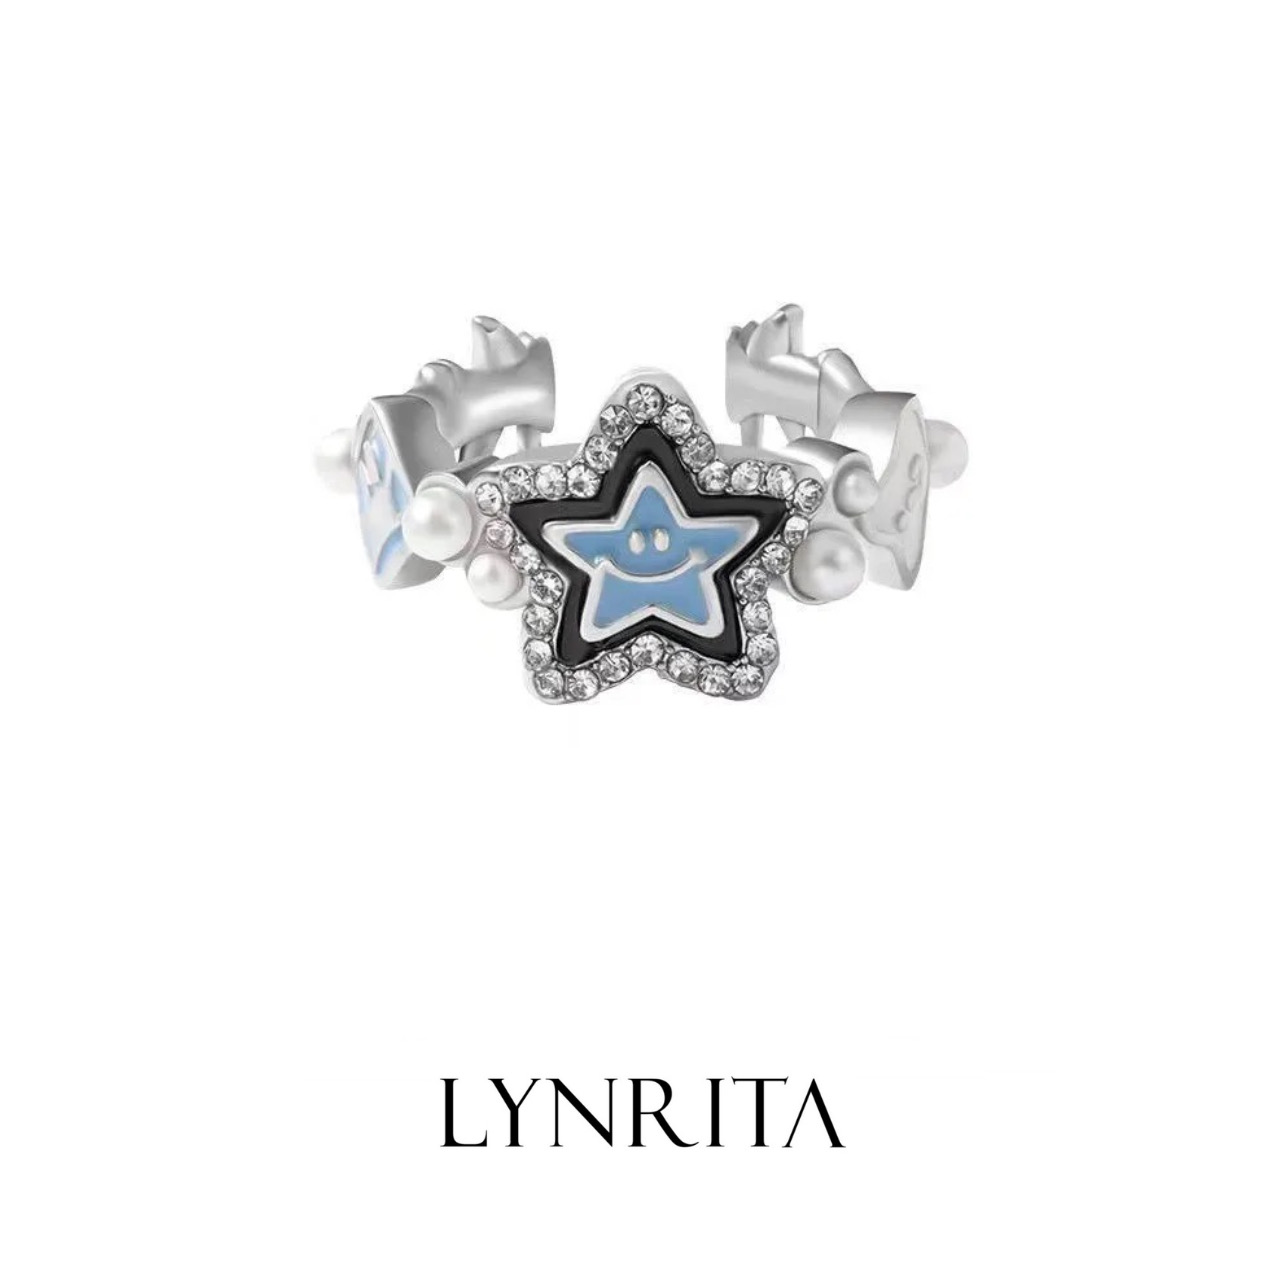 LYNRITA THE STAR RING SILVER